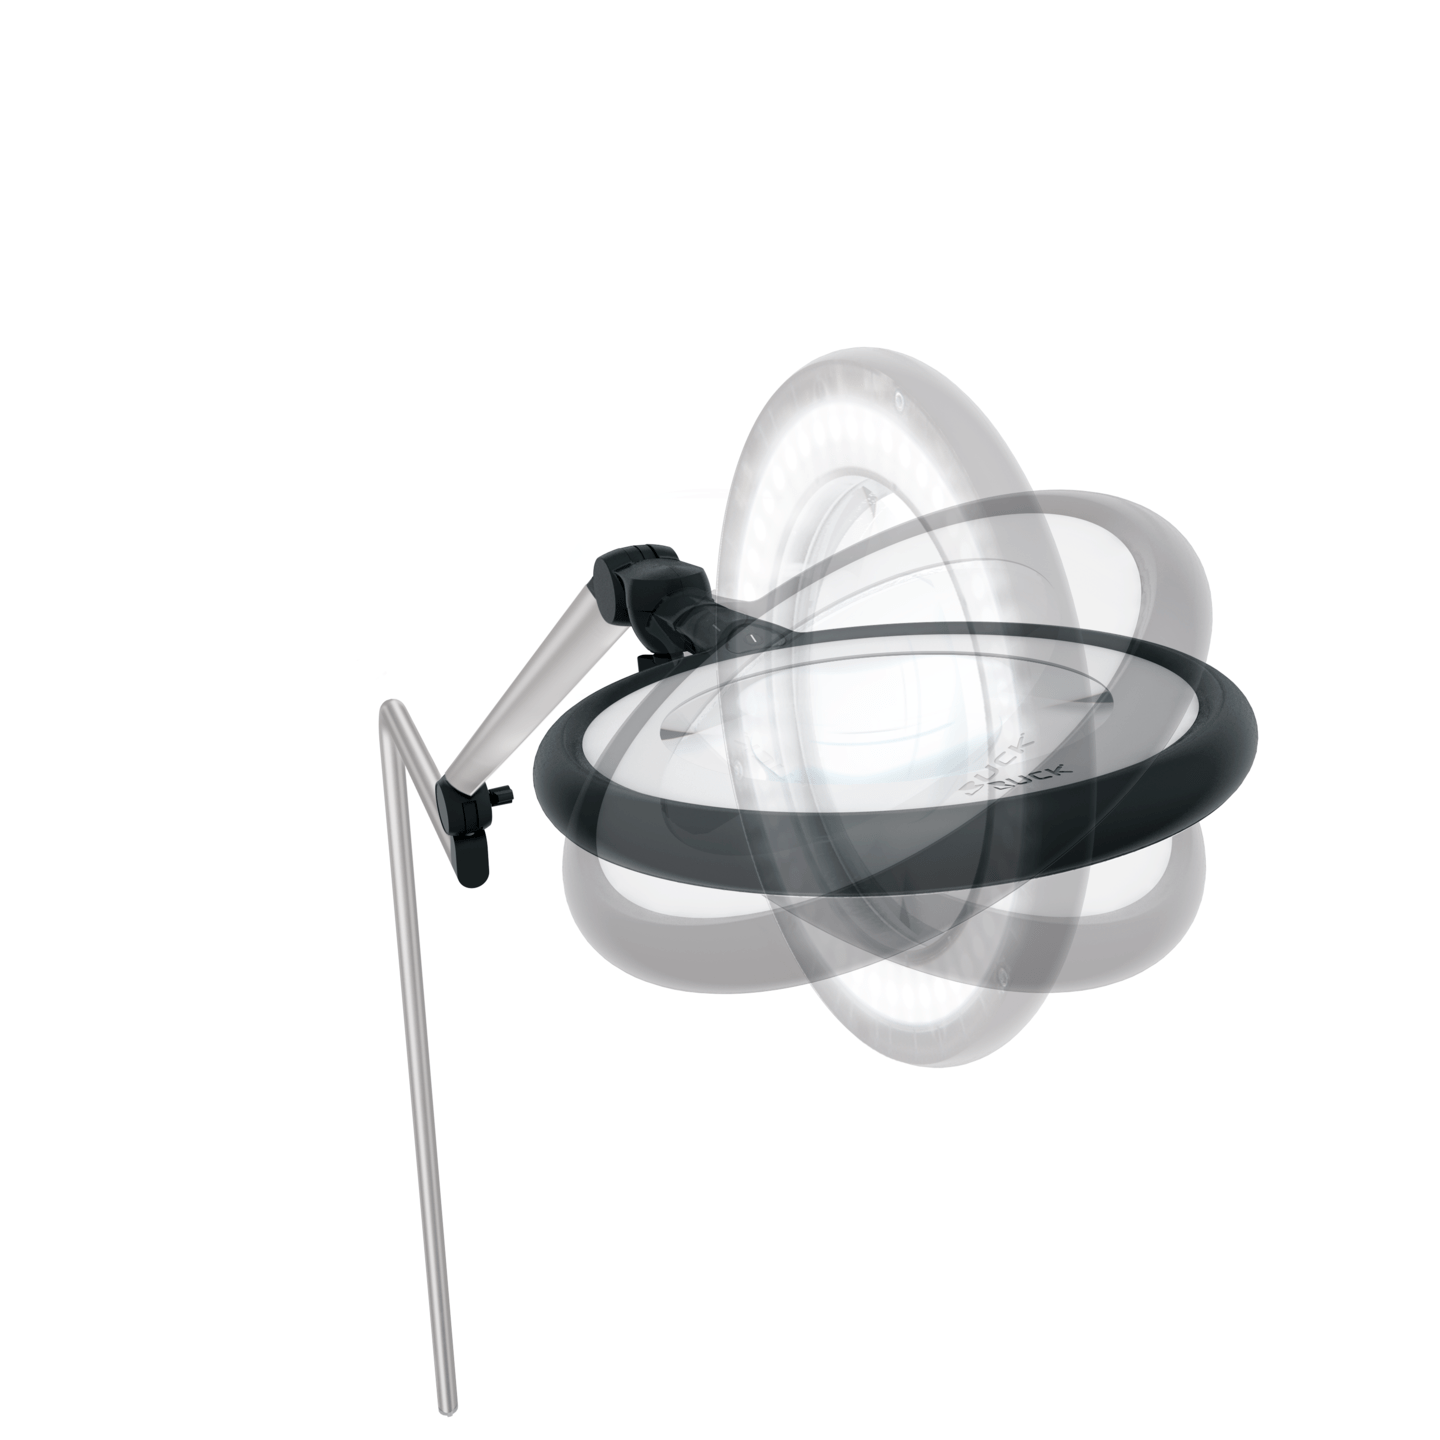 PODOLOG - RUCK® PODOLOG CIRCLE XL professional Magnifying Lamp